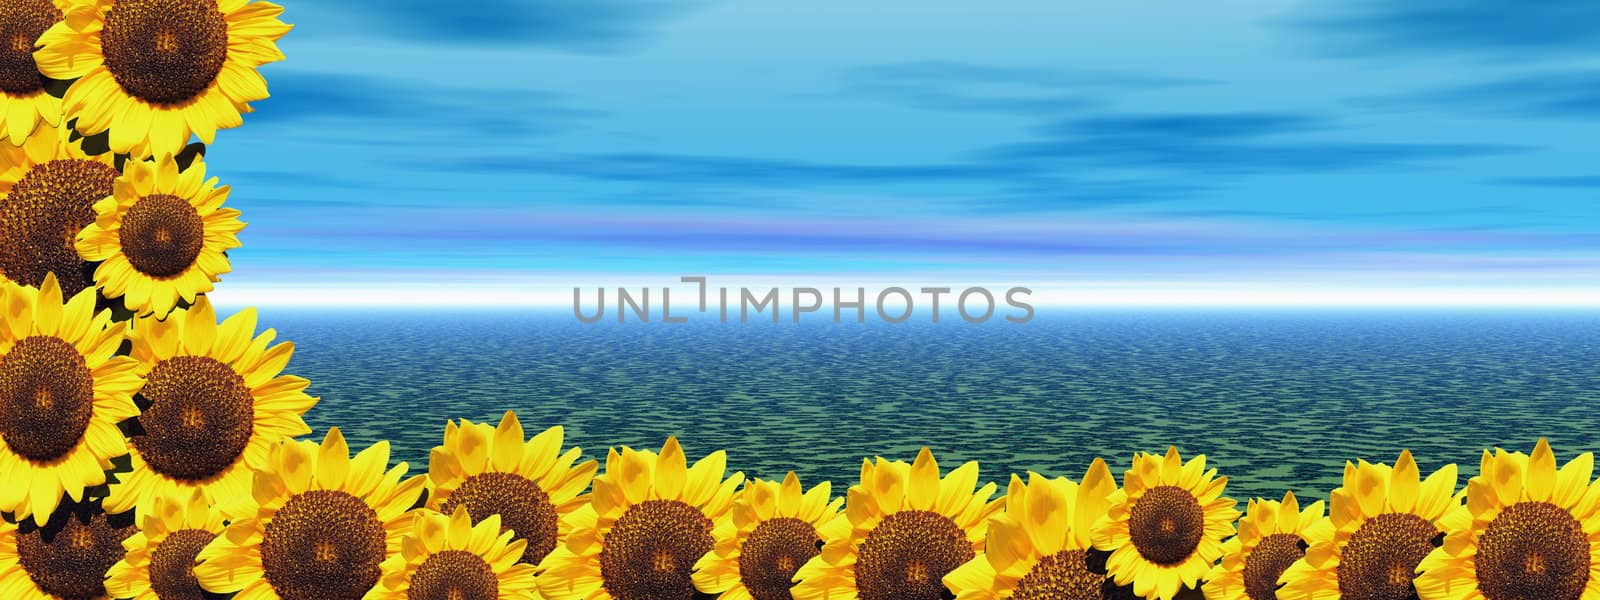 Blue ocean and sunflowers by Elenaphotos21